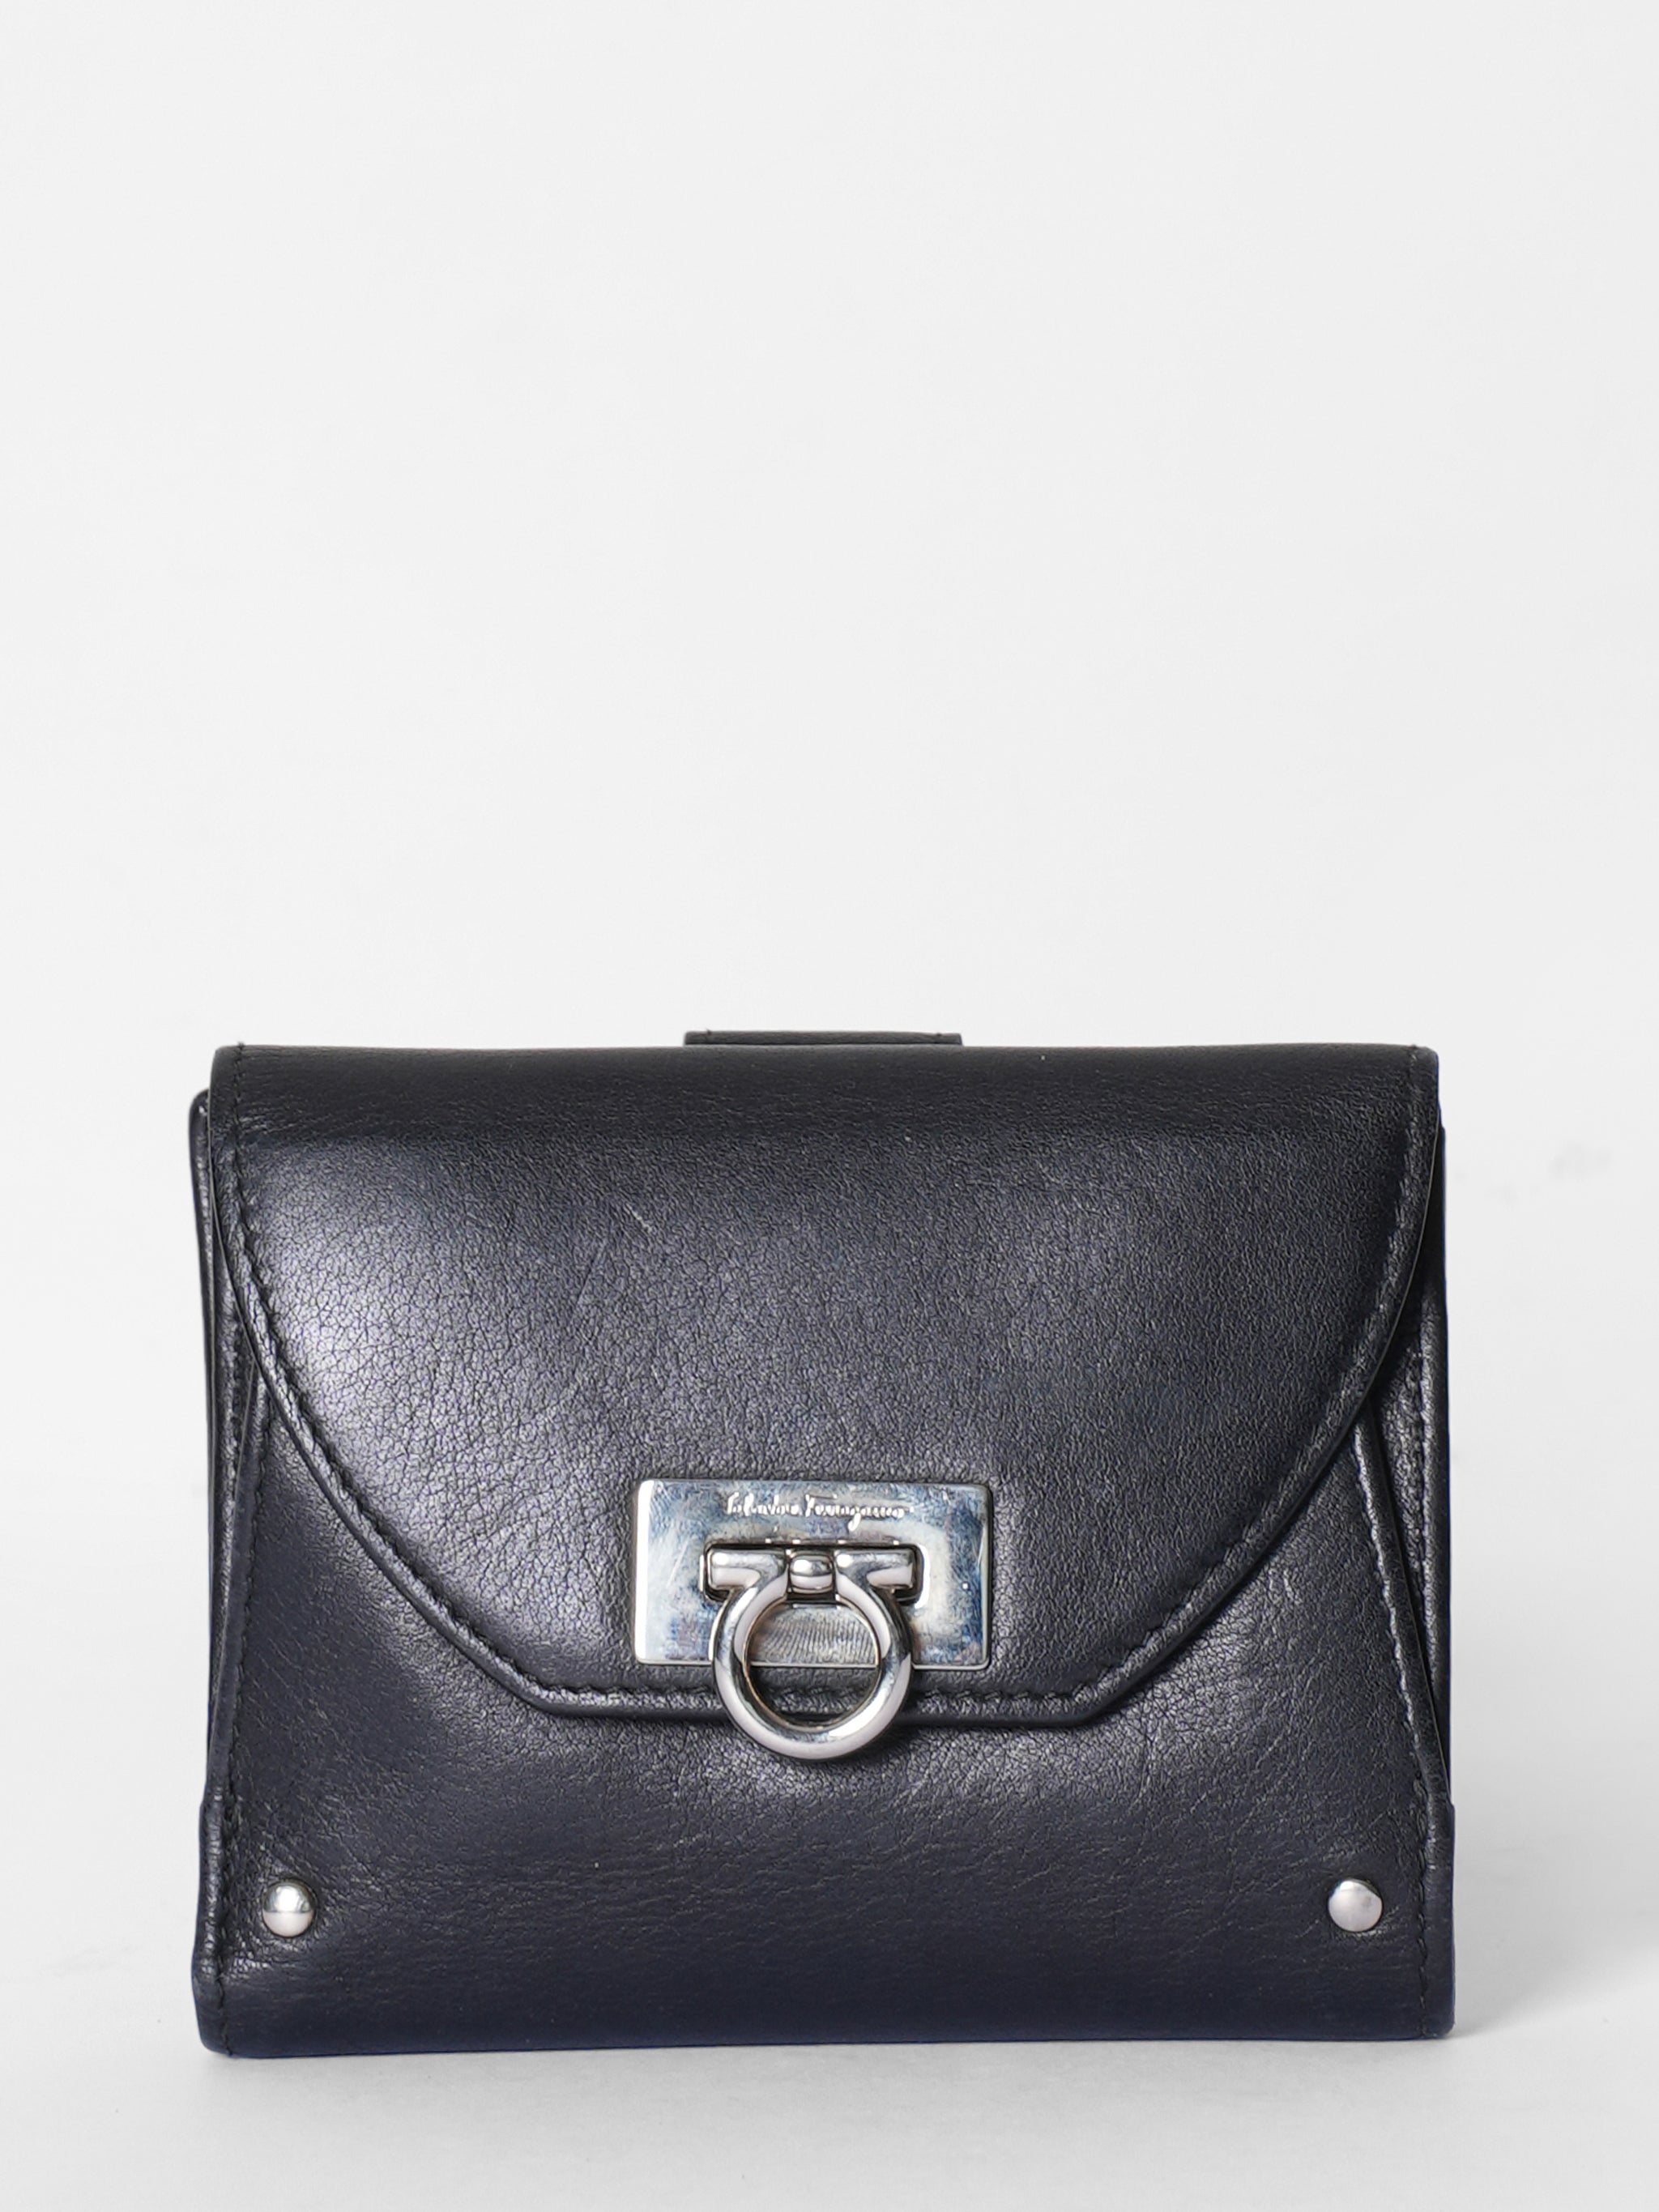 Salvatore Ferragamo Black Leather Classic Meditarraneo Compact Wallet